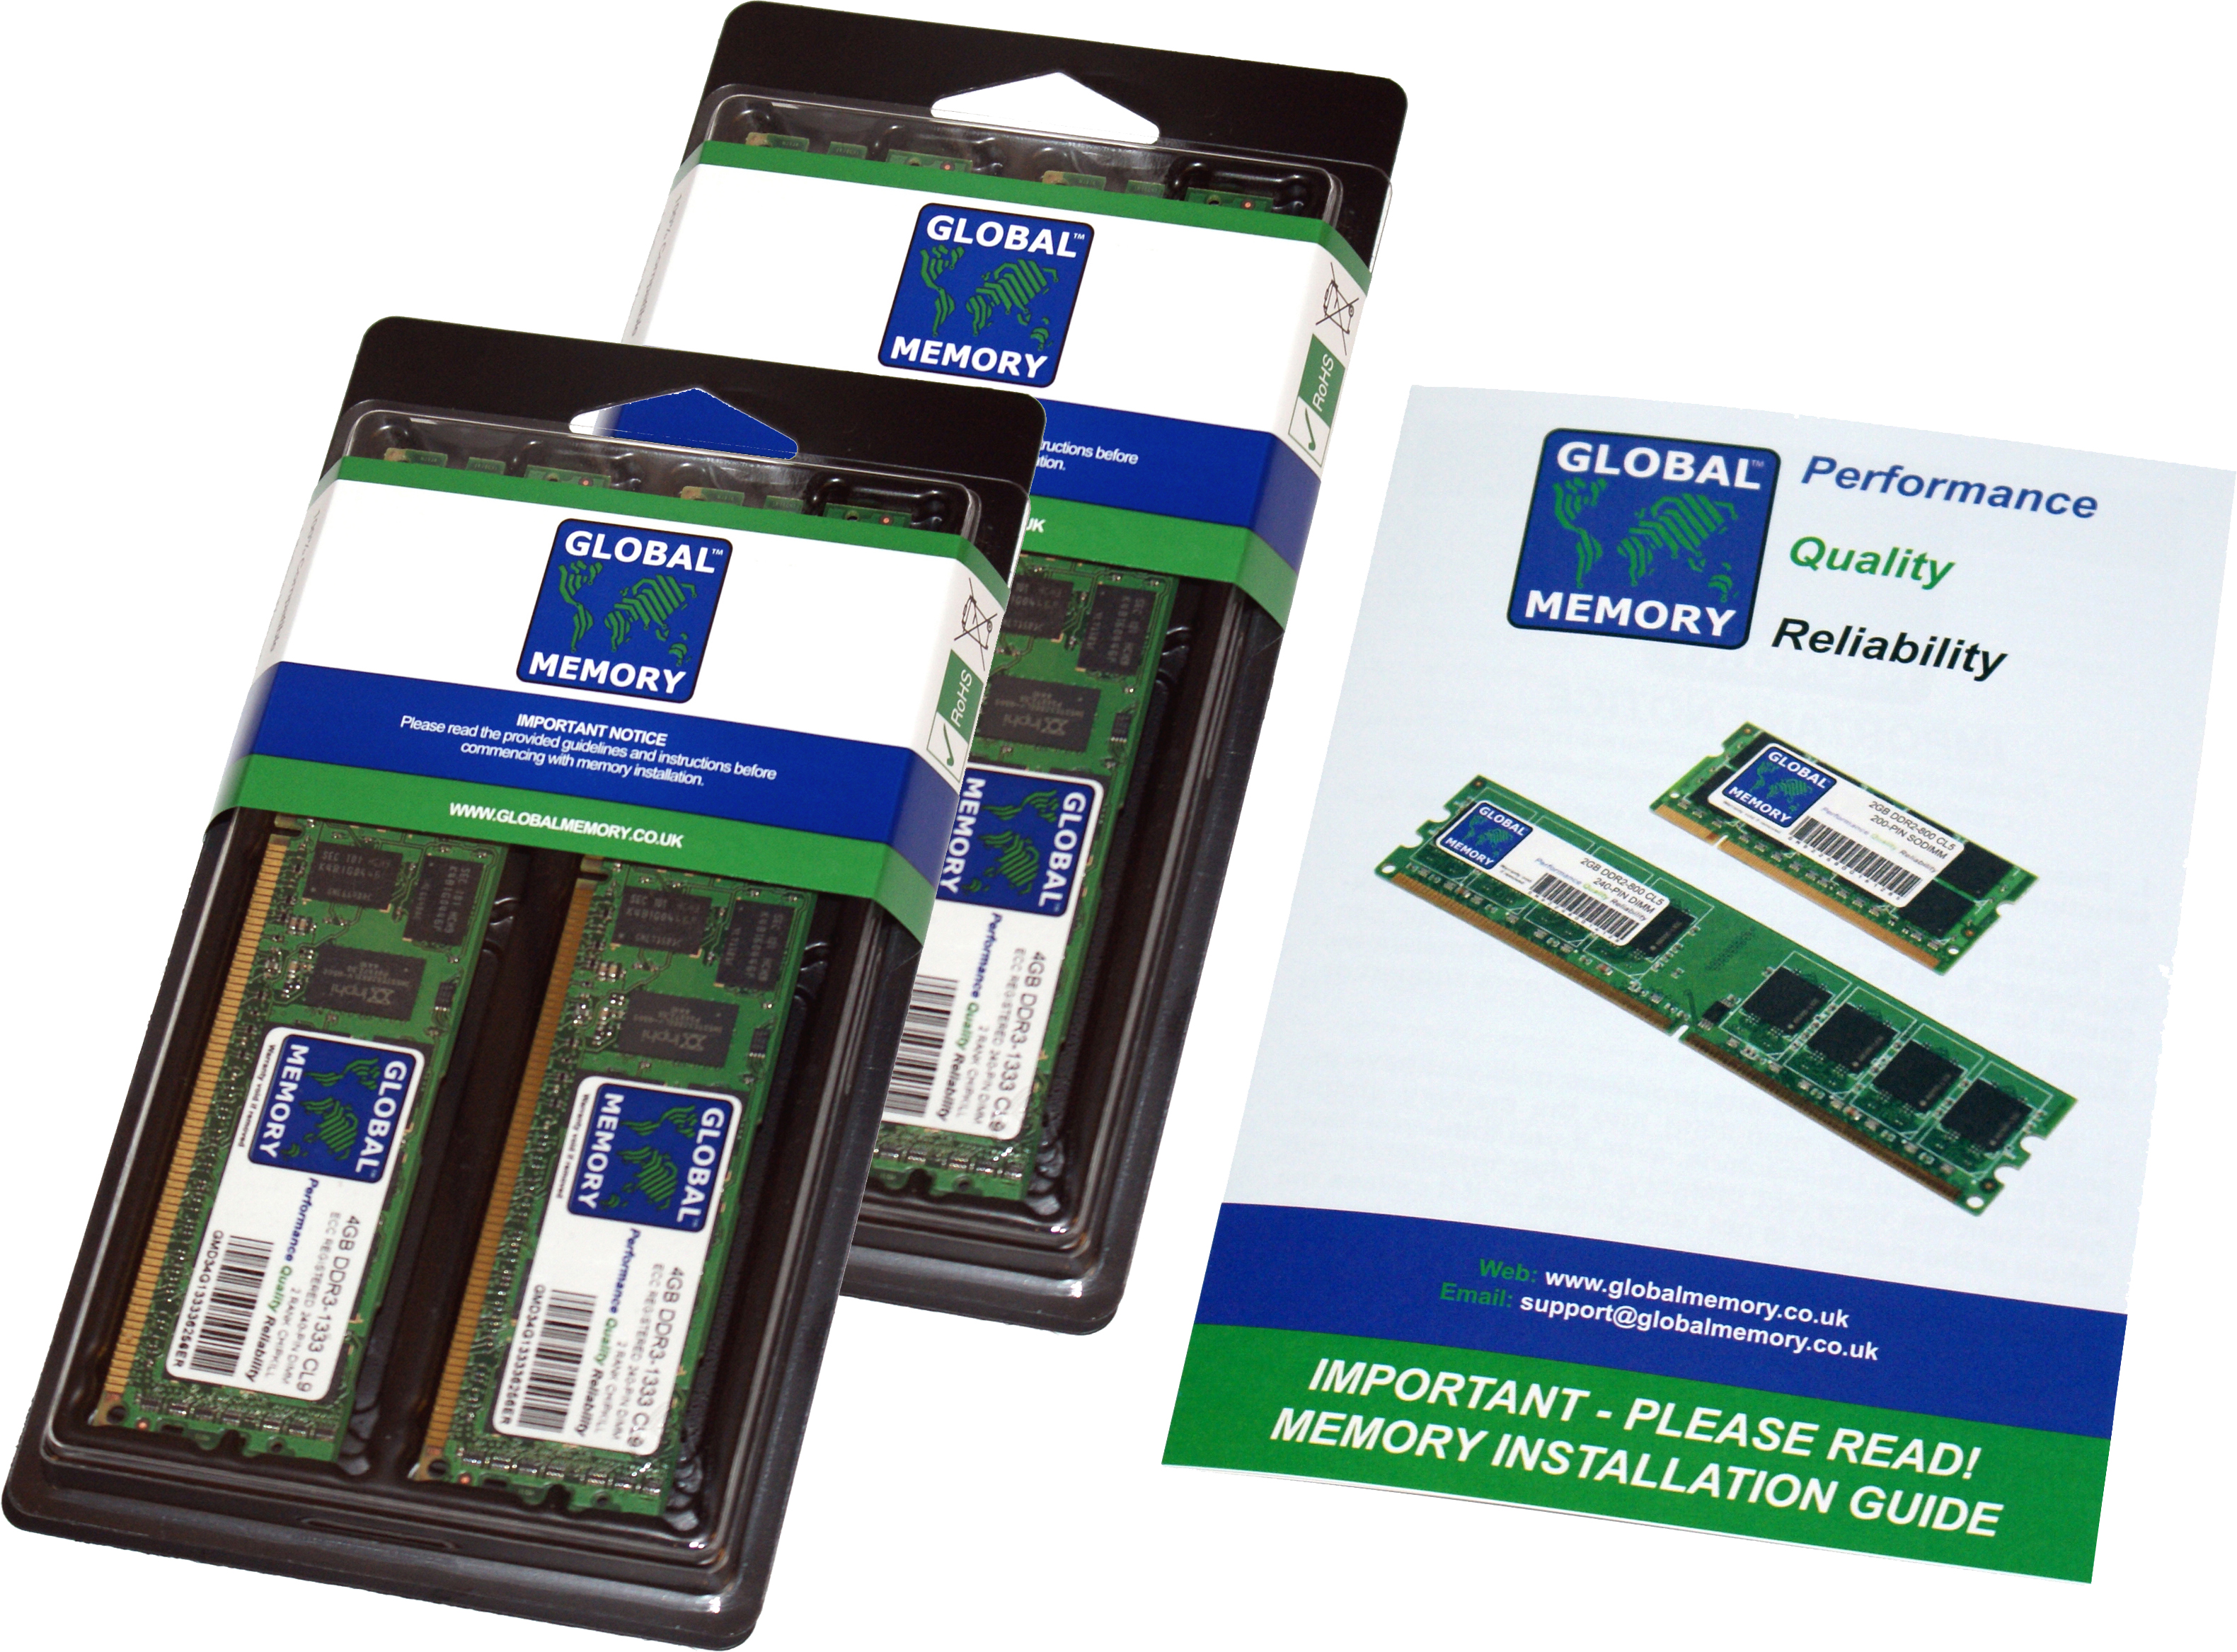 64GB (2 x 32GB) DDR4 2400MHz PC4-19200 288-PIN ECC REGISTERED DIMM (RDIMM) MEMORY RAM KIT FOR LENOVO SERVERS/WORKSTATIONS (4 RANK KIT CHIPKILL)